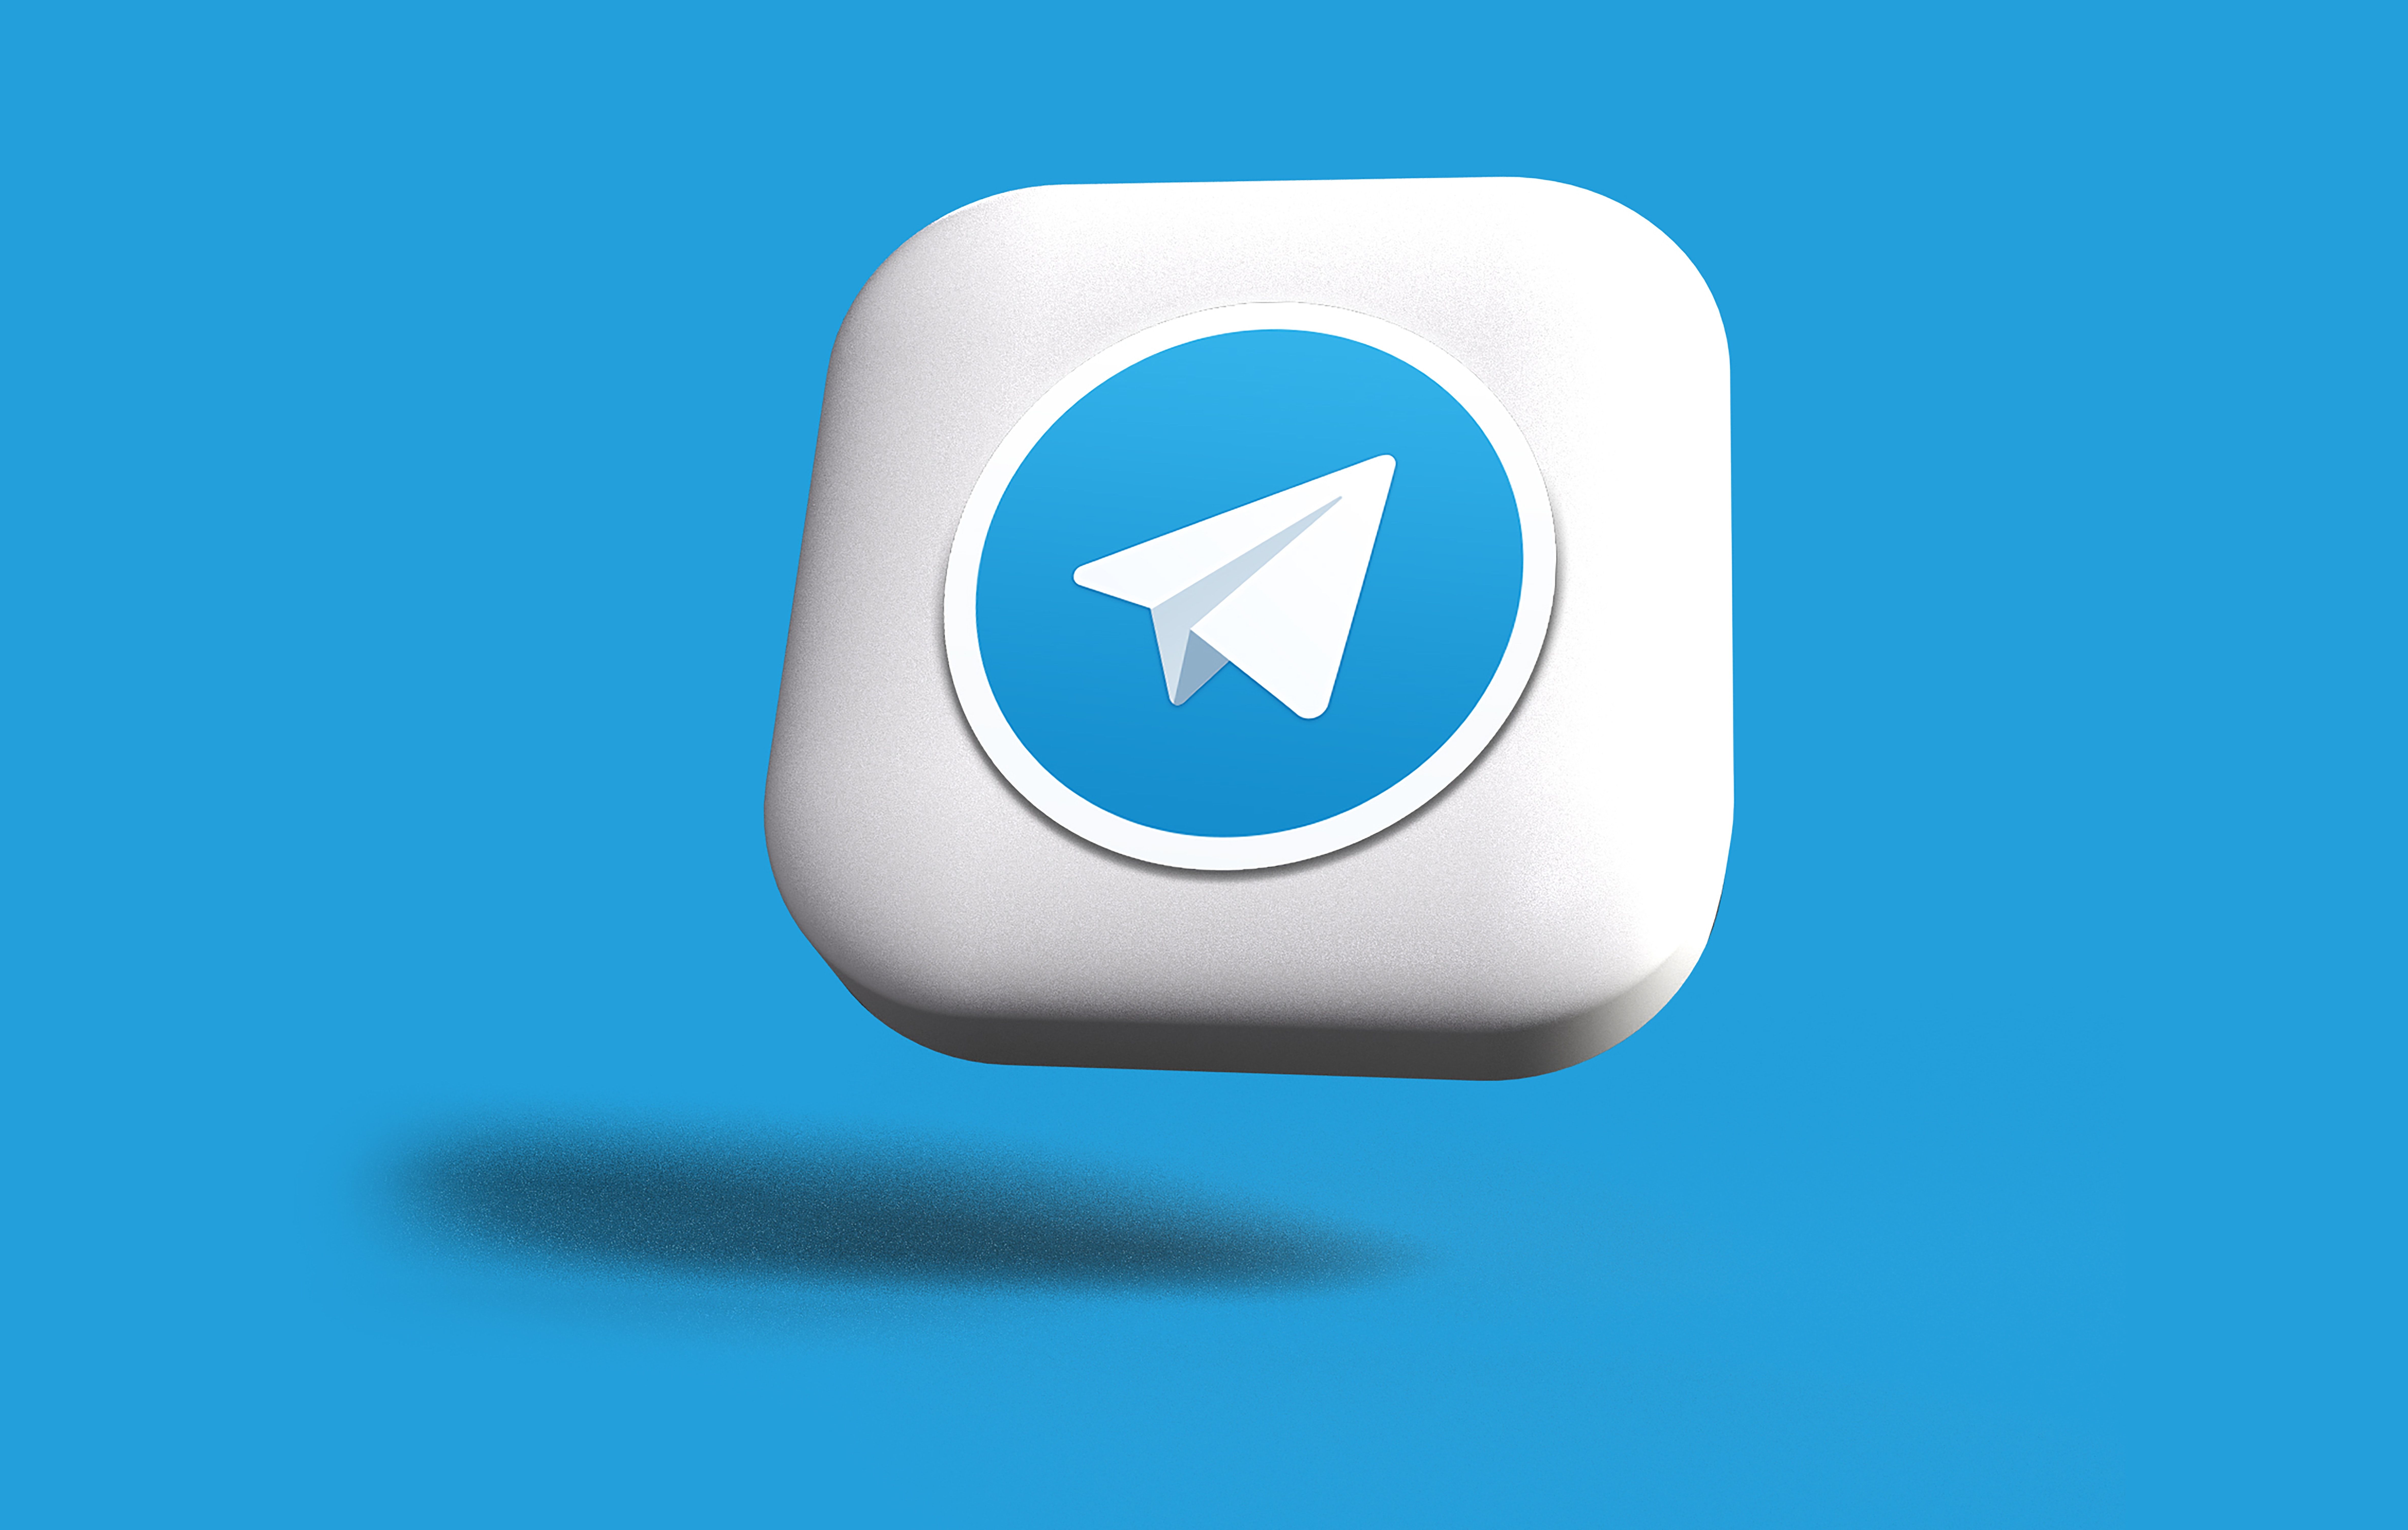 telegram-now-welcoming-custom-emoji-packs-for-premium-members-to-use